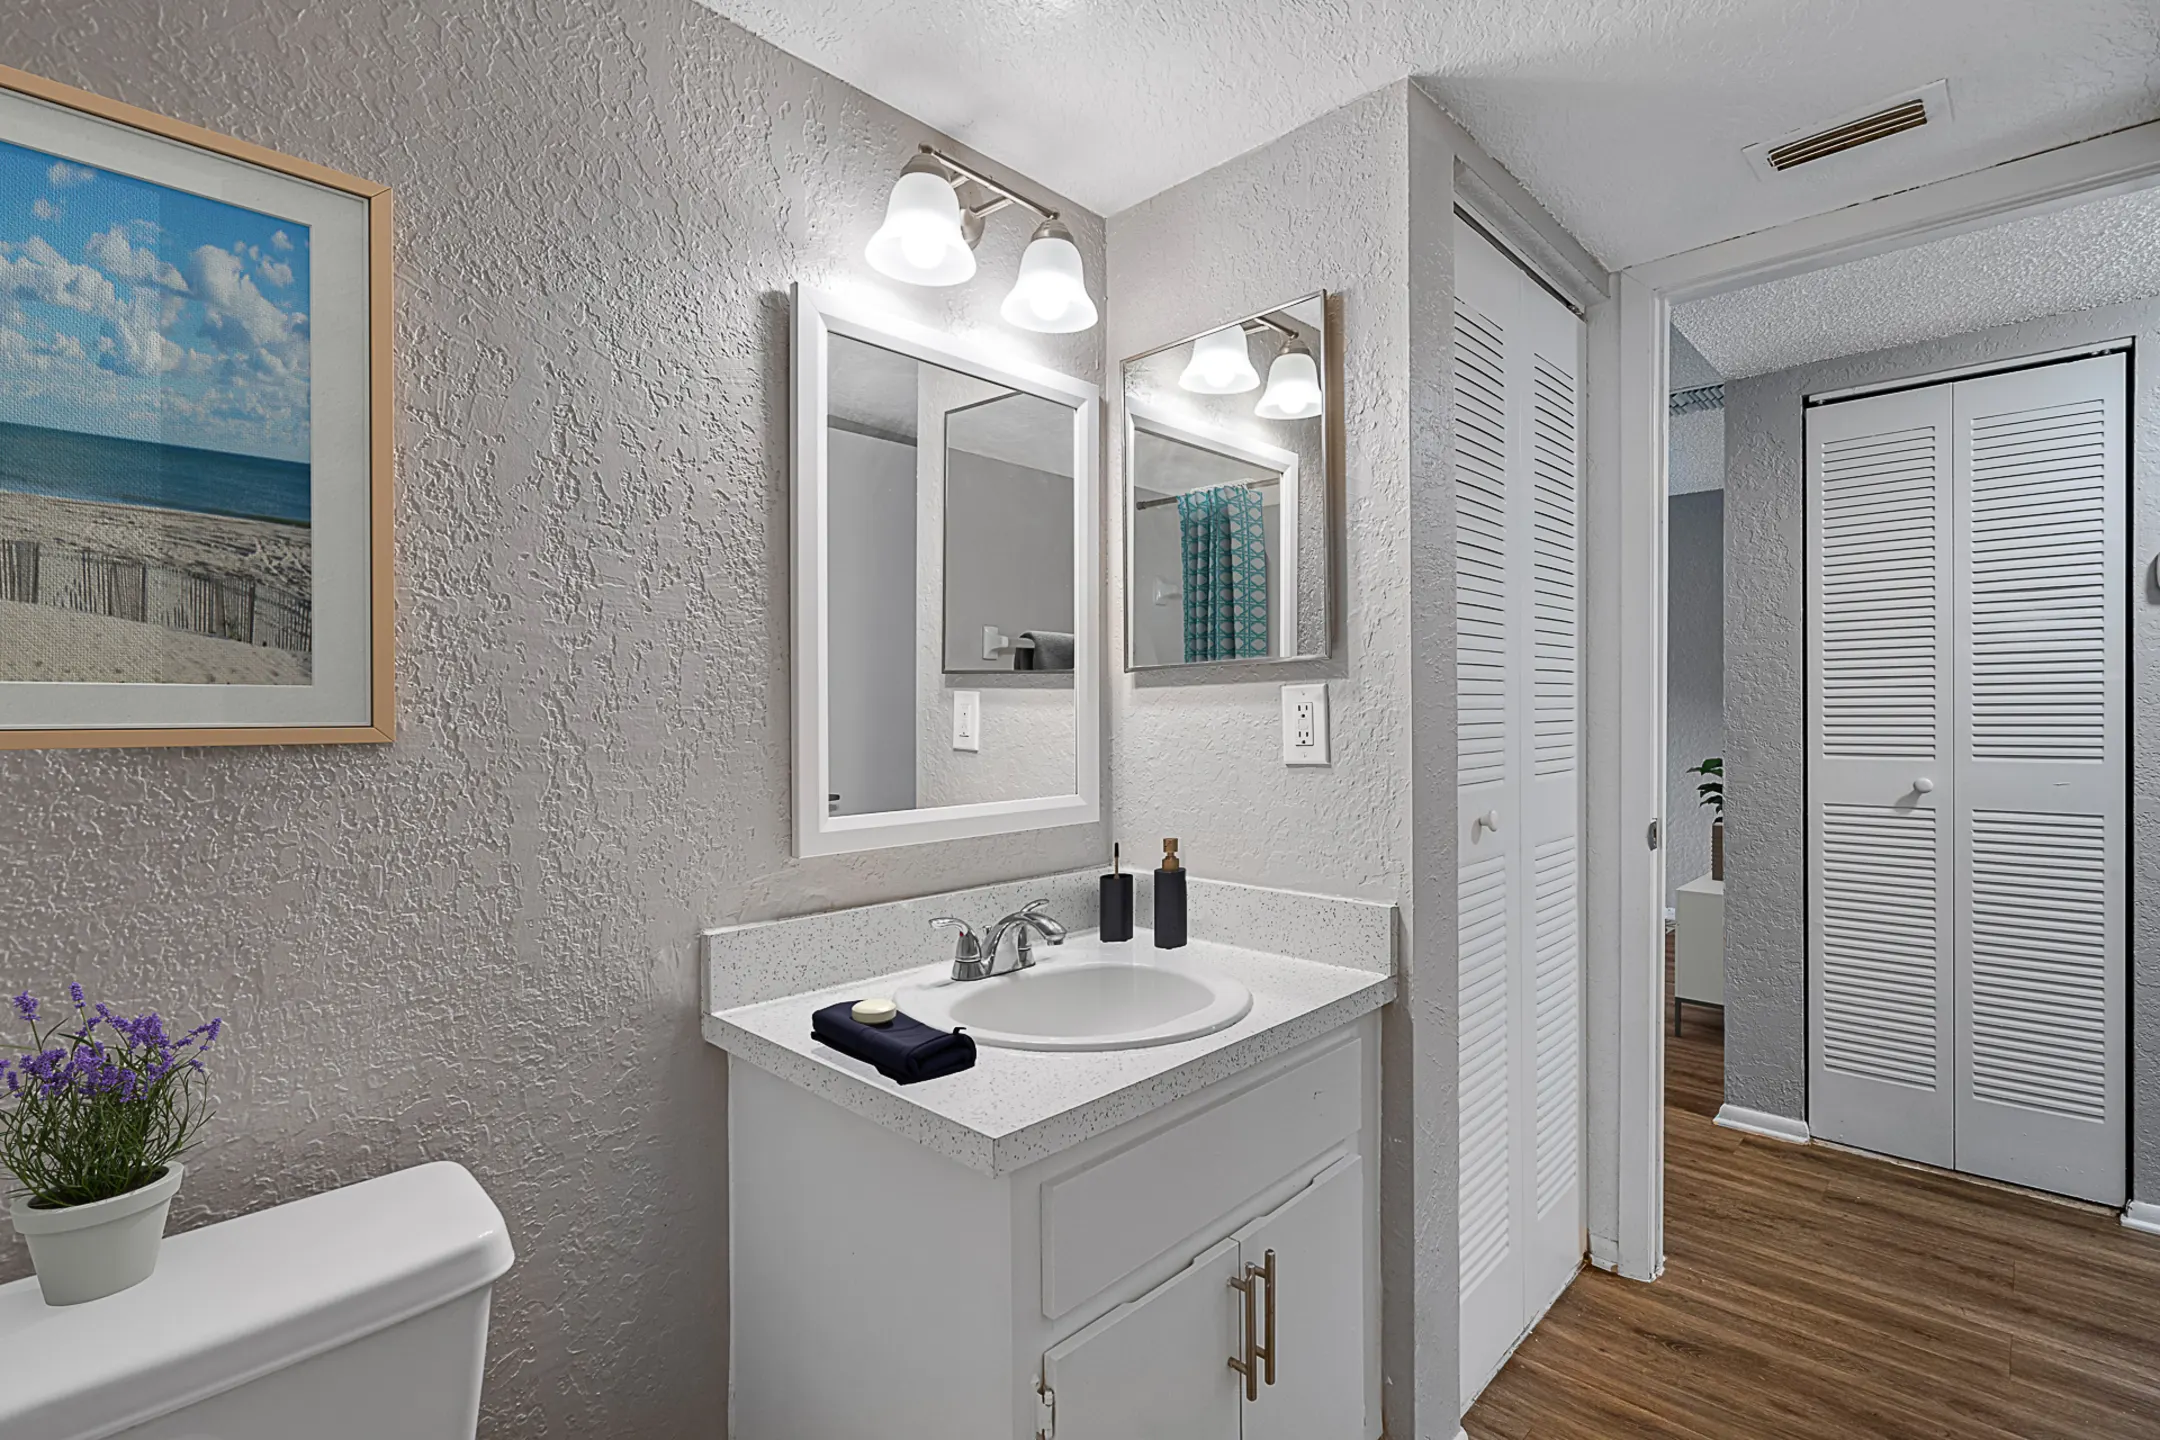 Bathroom - 49th St Apartments - Pinellas Park, FL